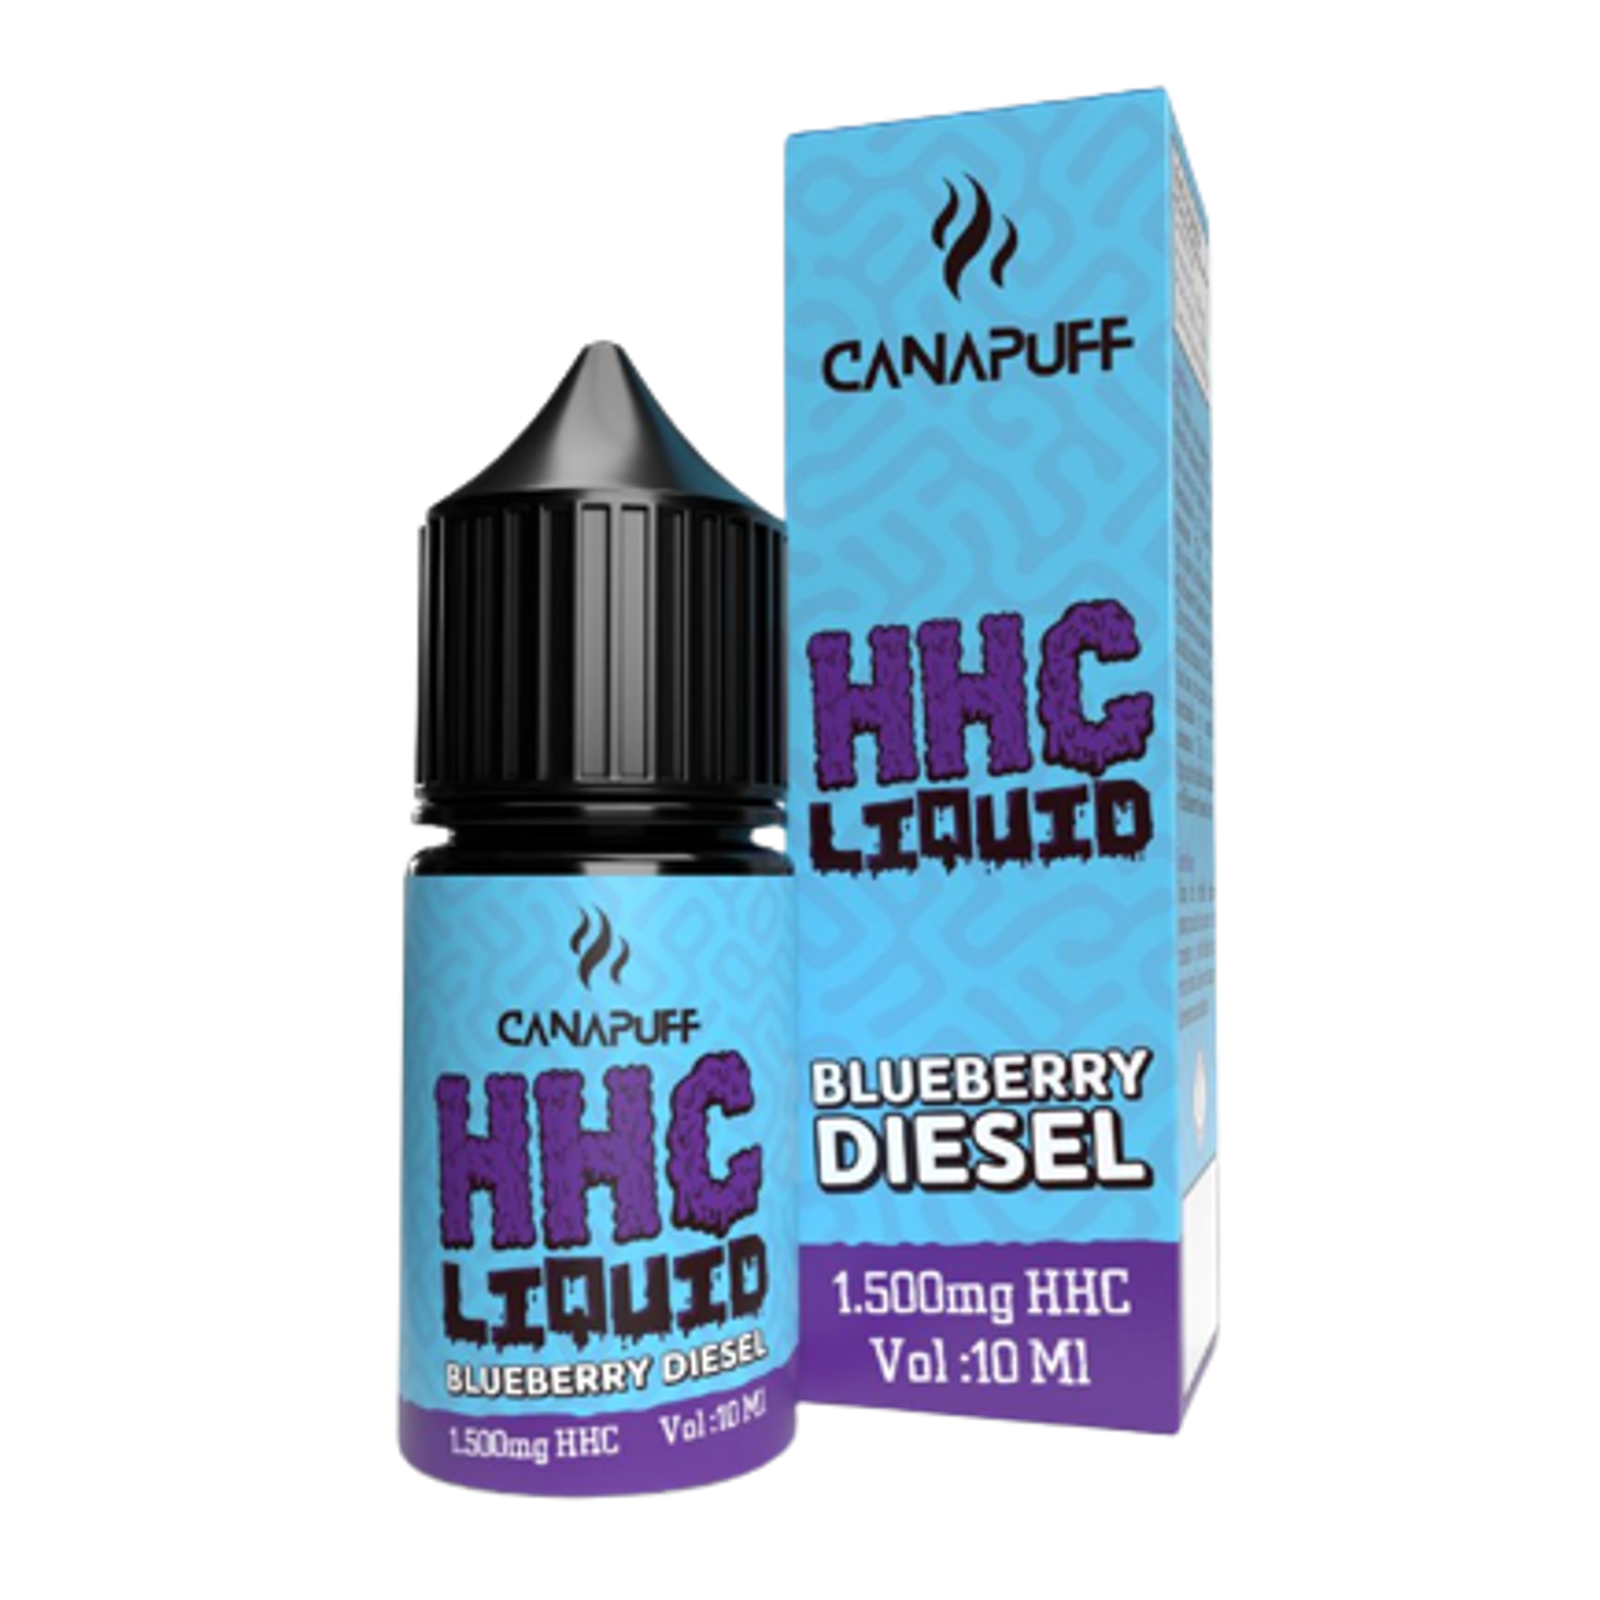 HHC-Liquid-1.5mg-Blueberry-Diesel-main-0.png